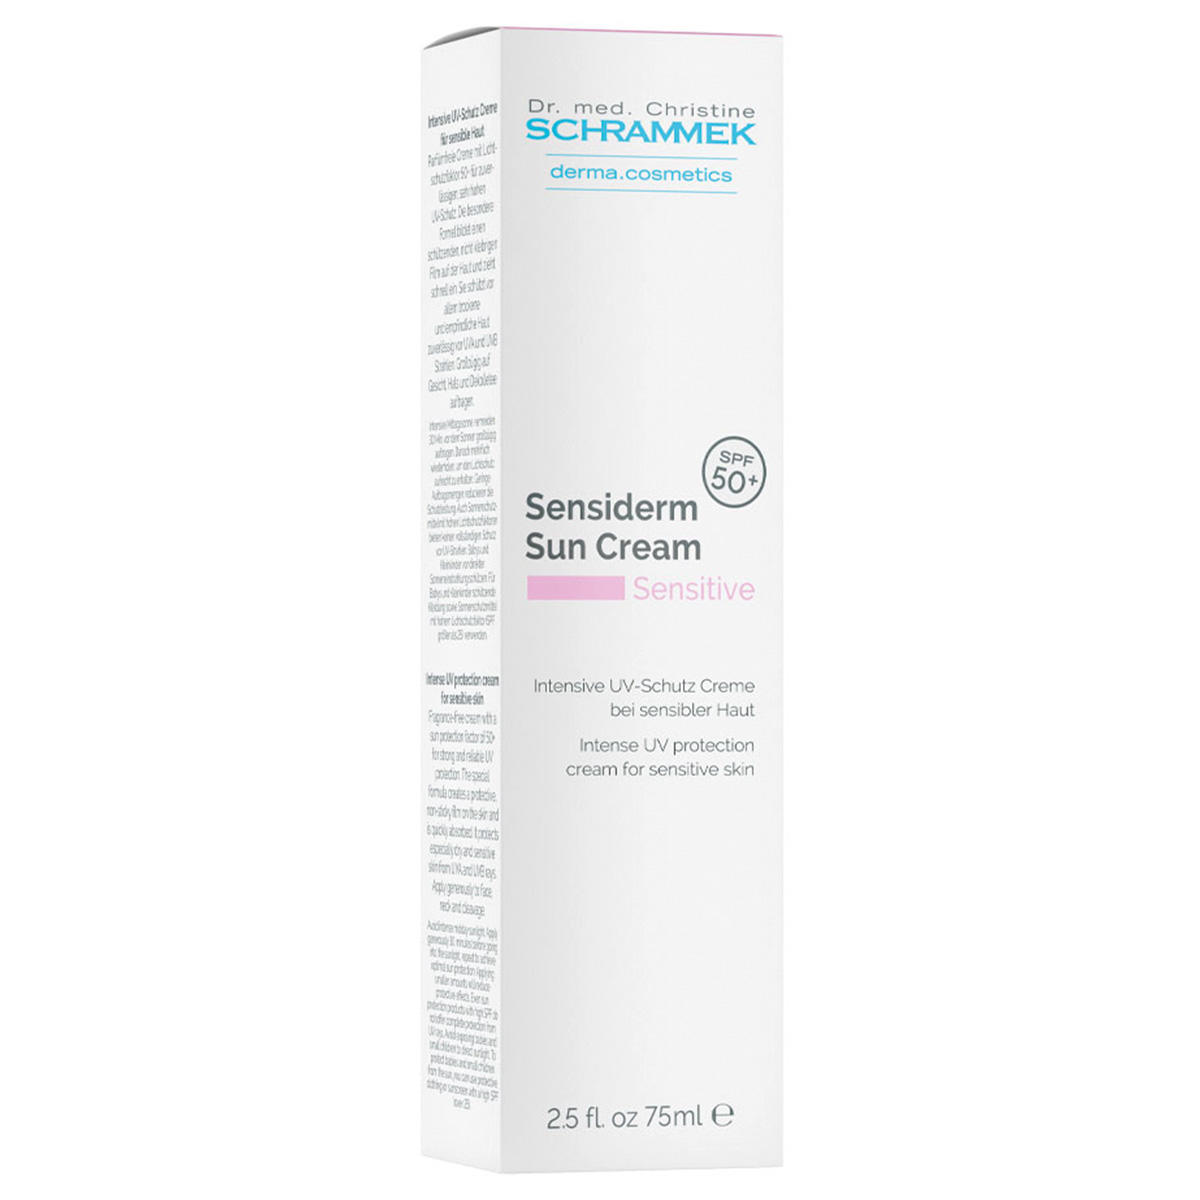 Dr. med. Christine SCHRAMMEK Sensitive Sensiderm Sun Cream SPF 50+ 75 ml - 2